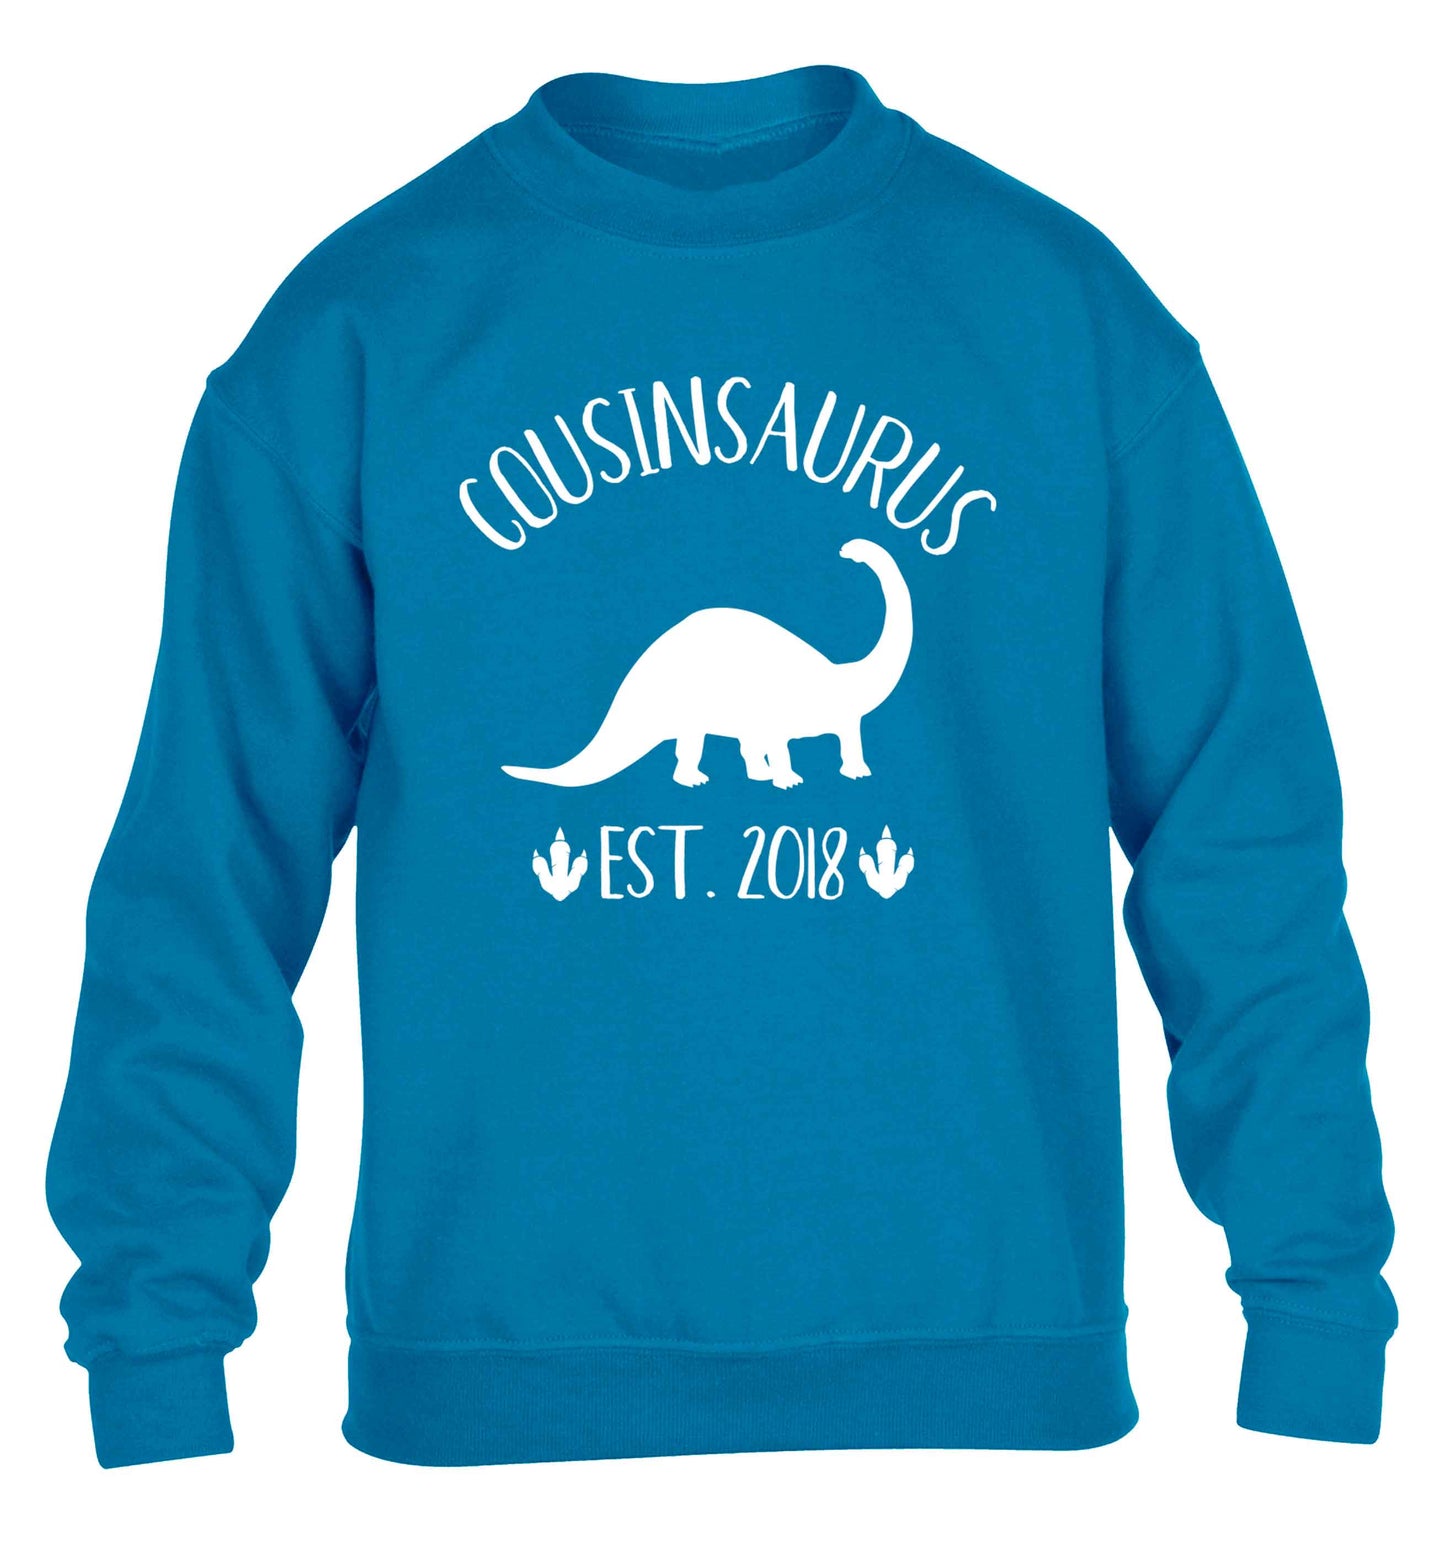 Personalised cousinsaurus since (custom date) children's blue sweater 12-13 Years